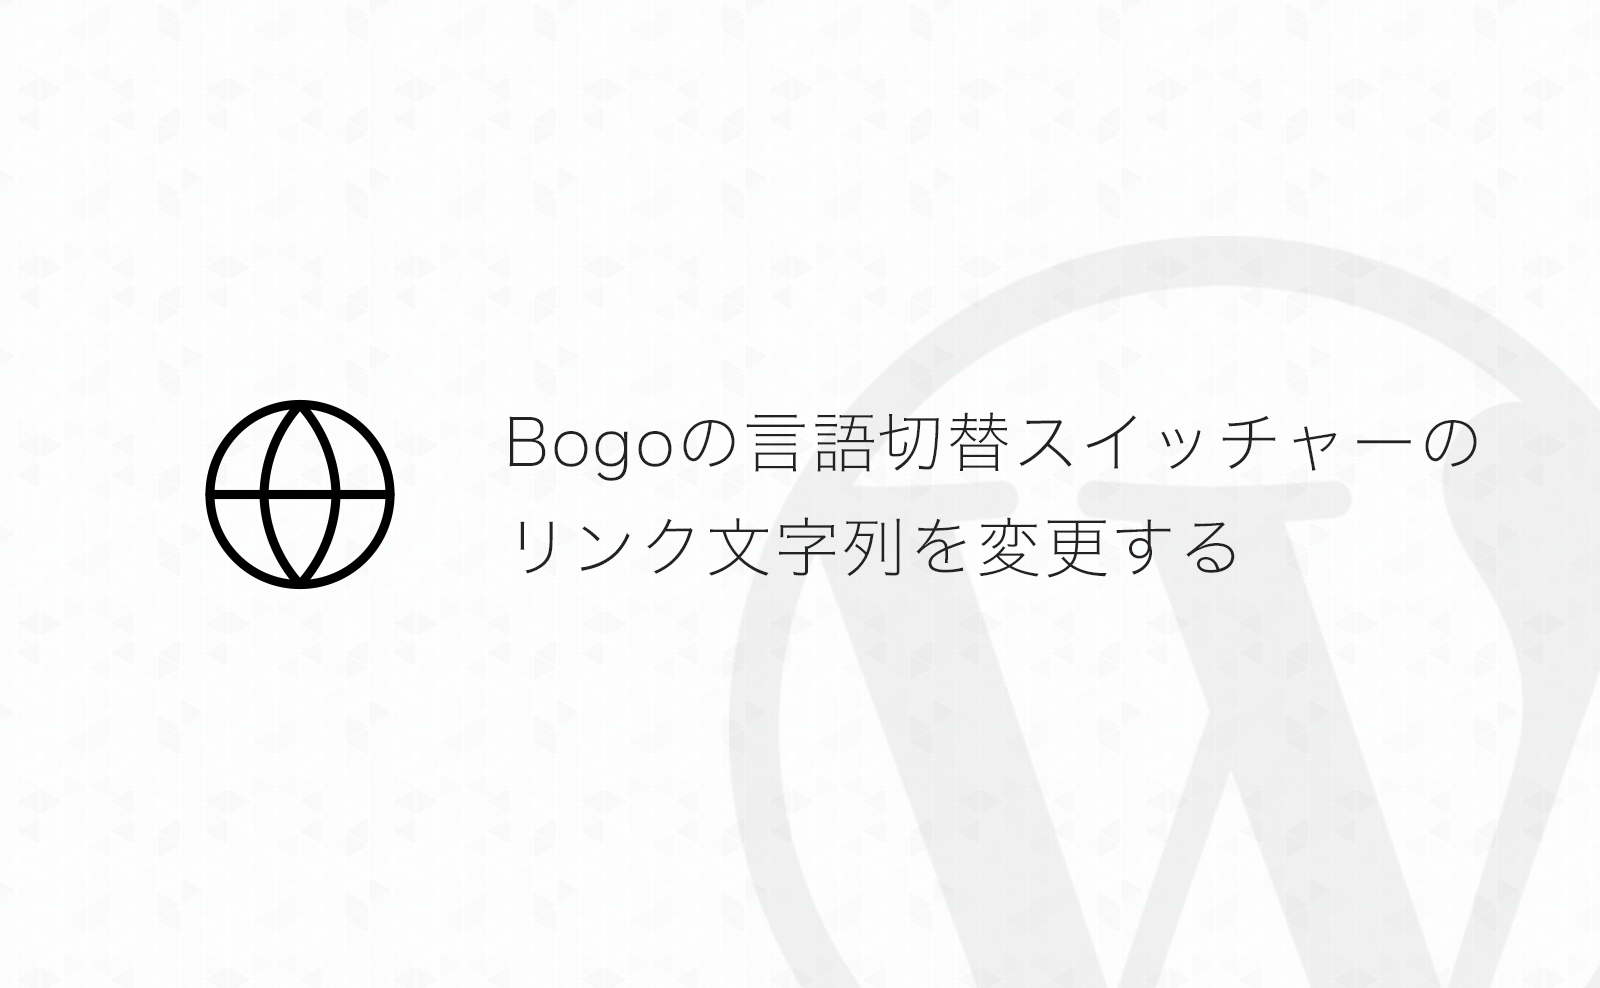 【WordPress】多言語化プラグイン「Bogo」の言語切替スイッチャーに表示される文字列を変更する方法